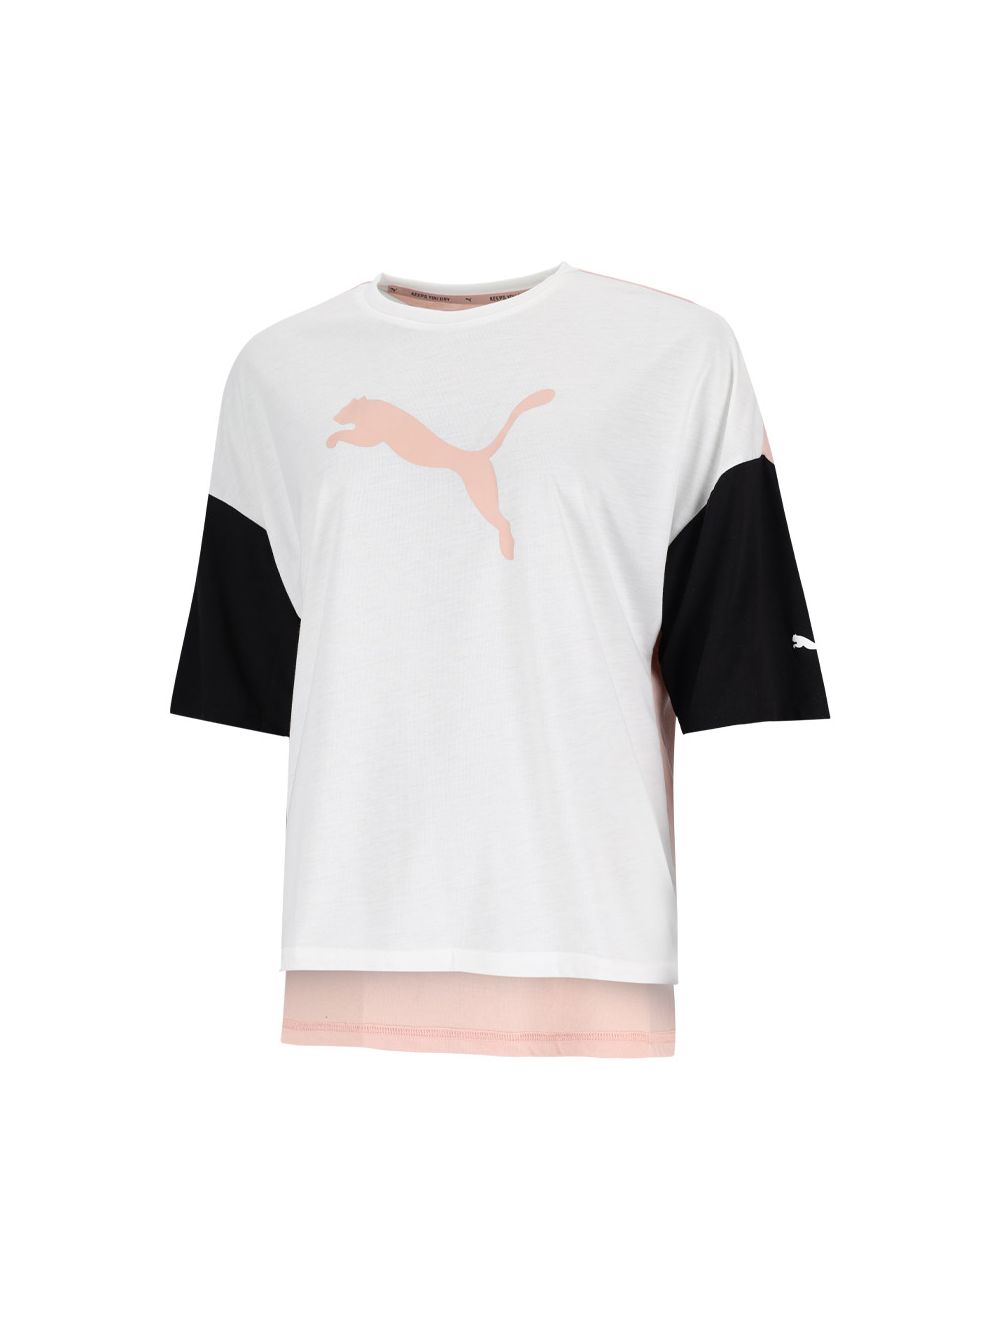 Shop Puma Modern Sports Fashion T-shirt Womens White Rose | Studi